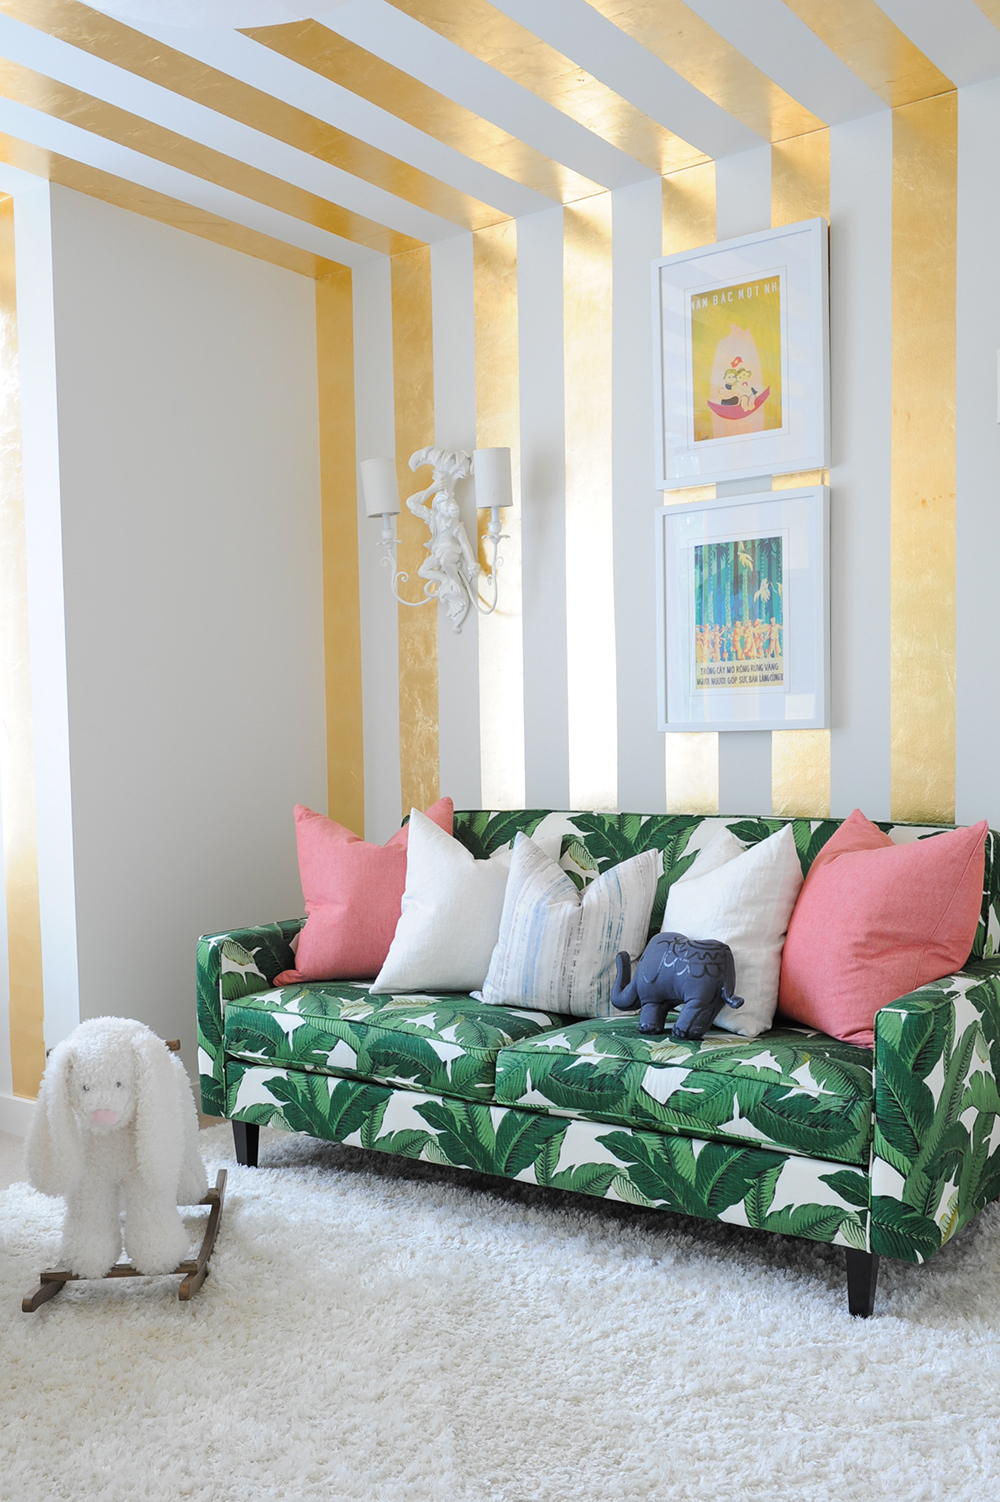 A stylish nursery featuring a tropical palm-leaf patterned sofa.